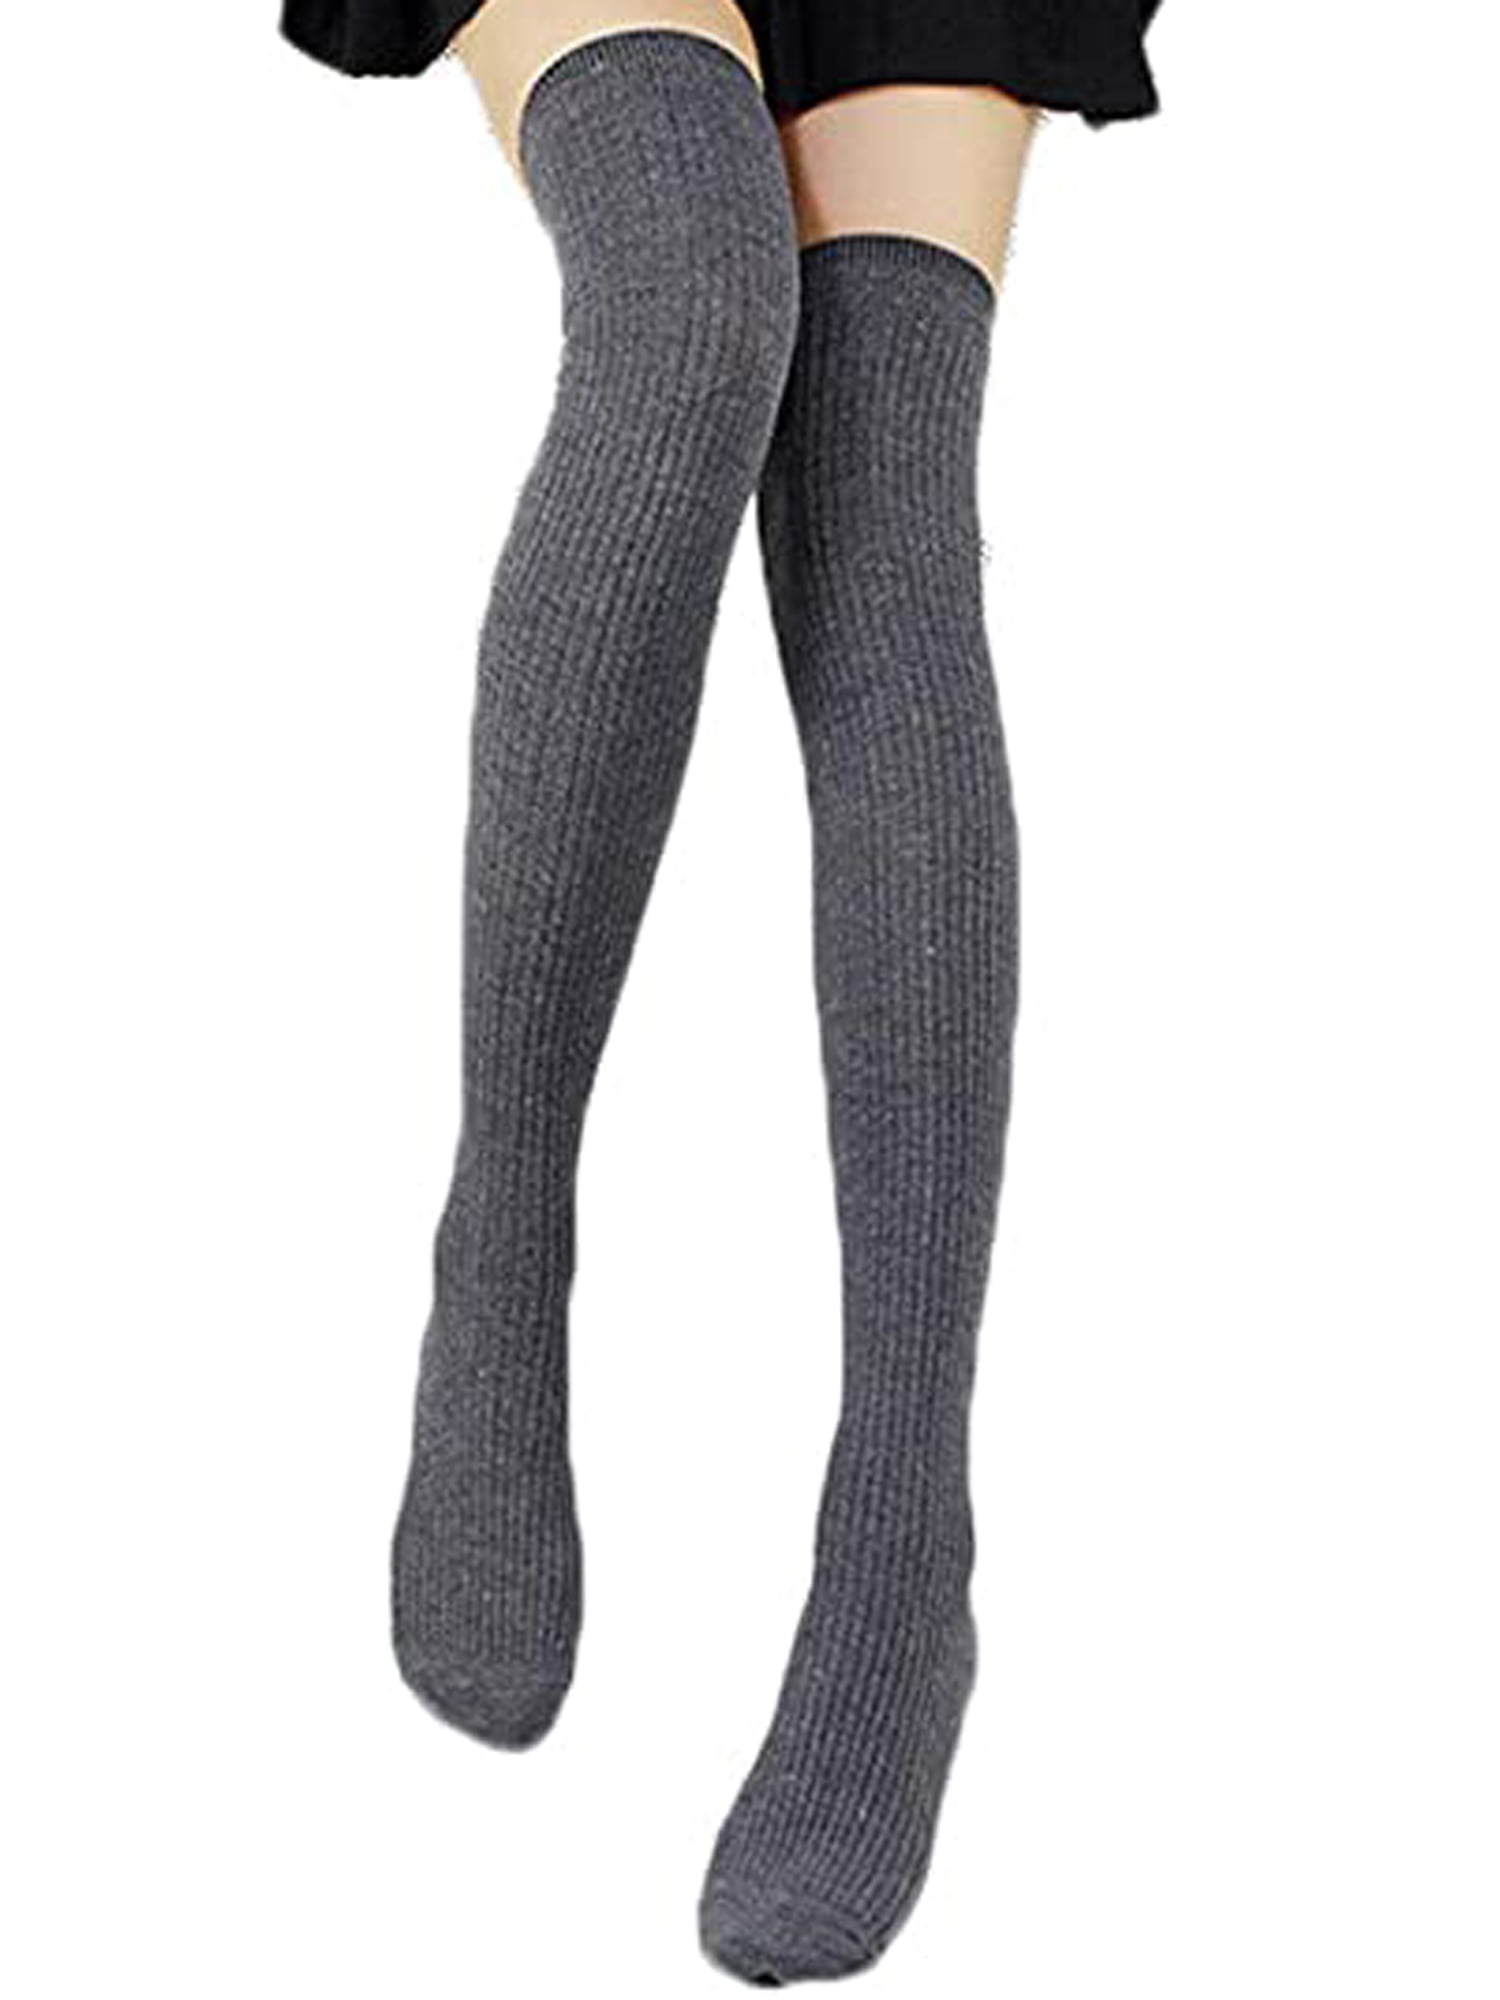 Girls Knit Thigh High Socks Knee High Tube Sock with Stripes， School Uniform Stockings Leg Warmers 